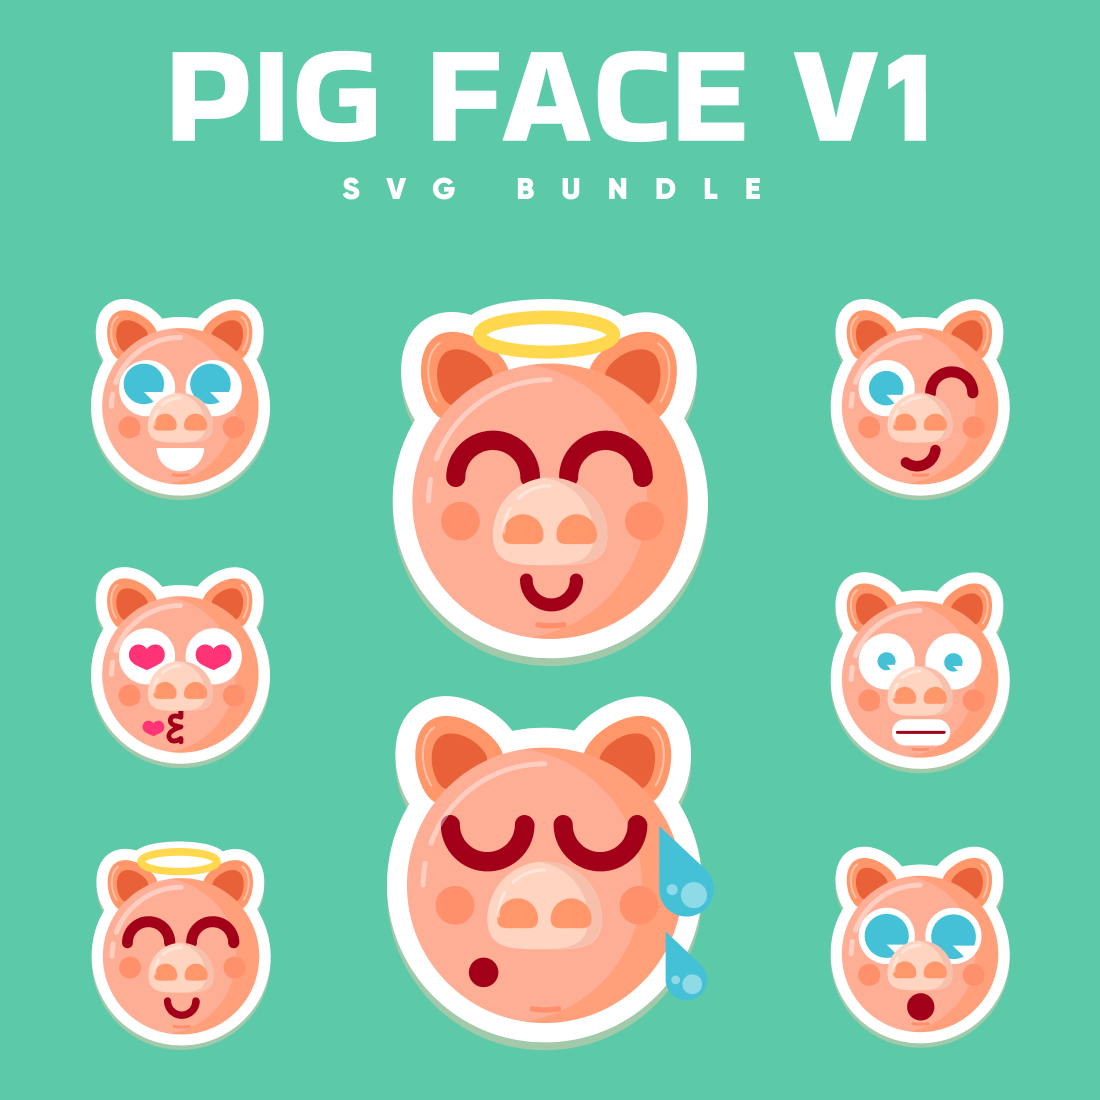 Pig face sticker set on a green background.